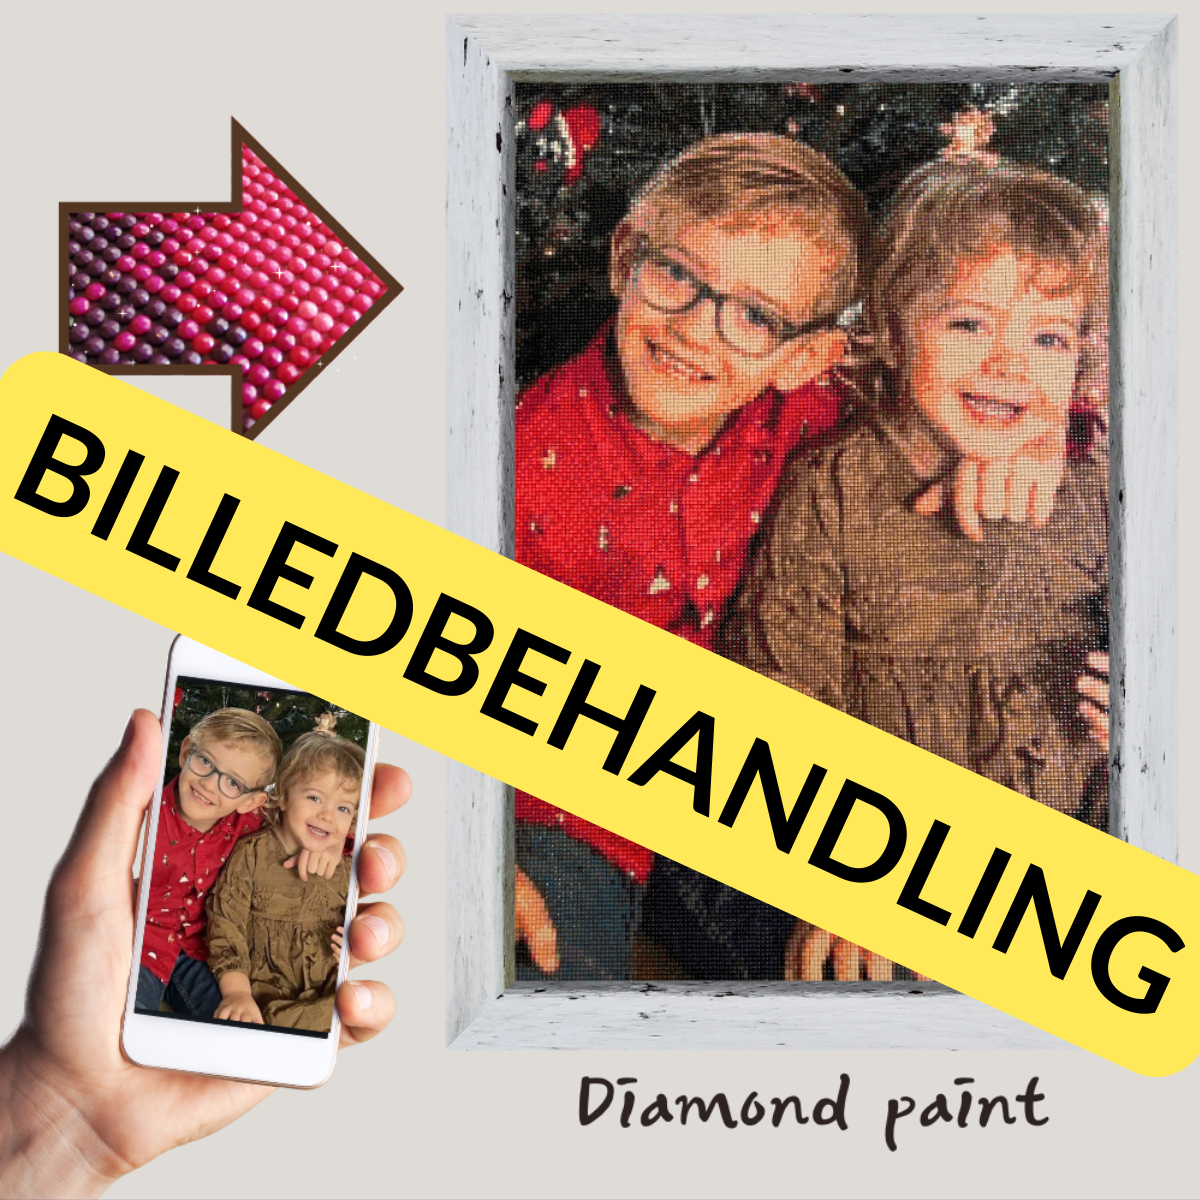 Diamond Painting - Billedbehandling thumbnail